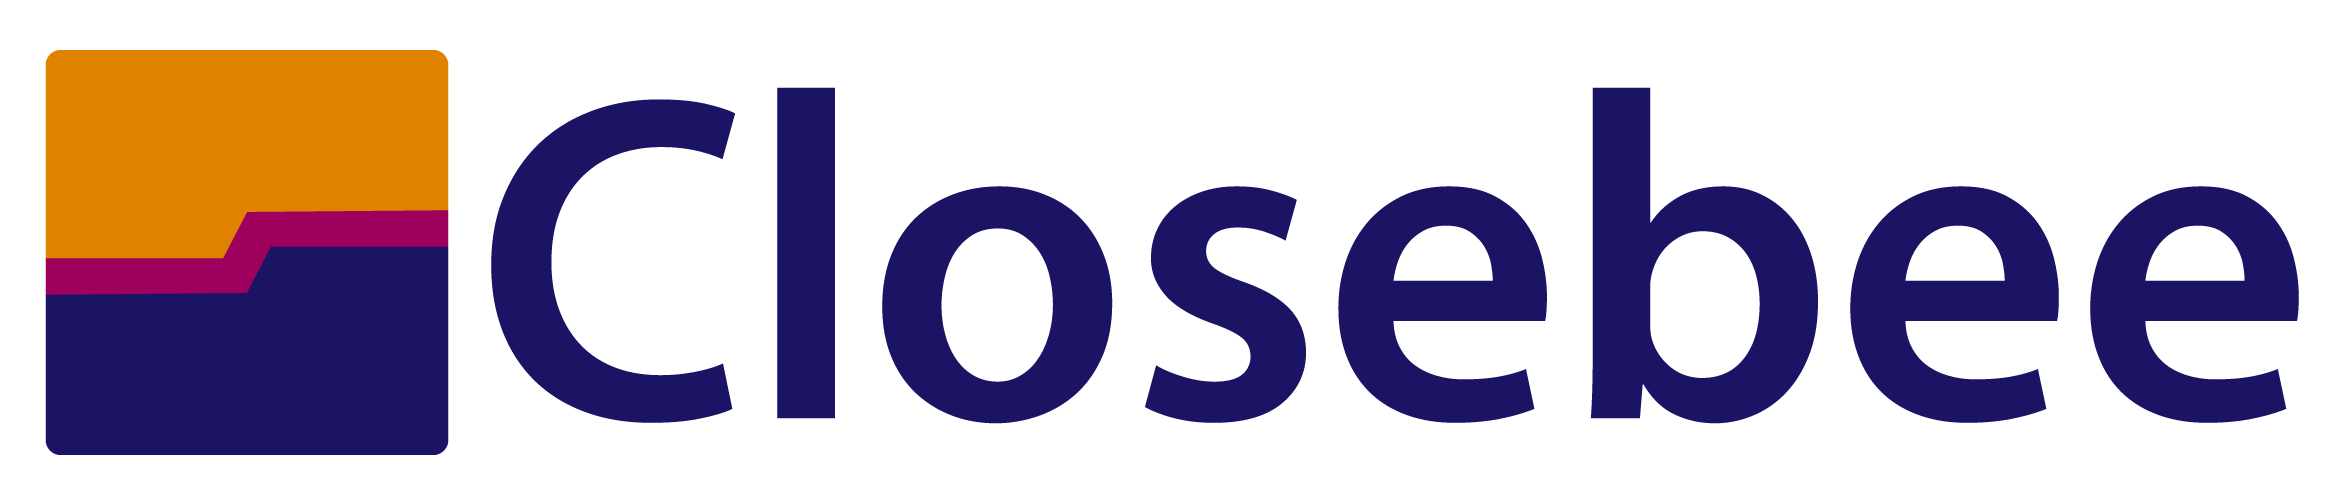 Closebee Logo | pearnode.com